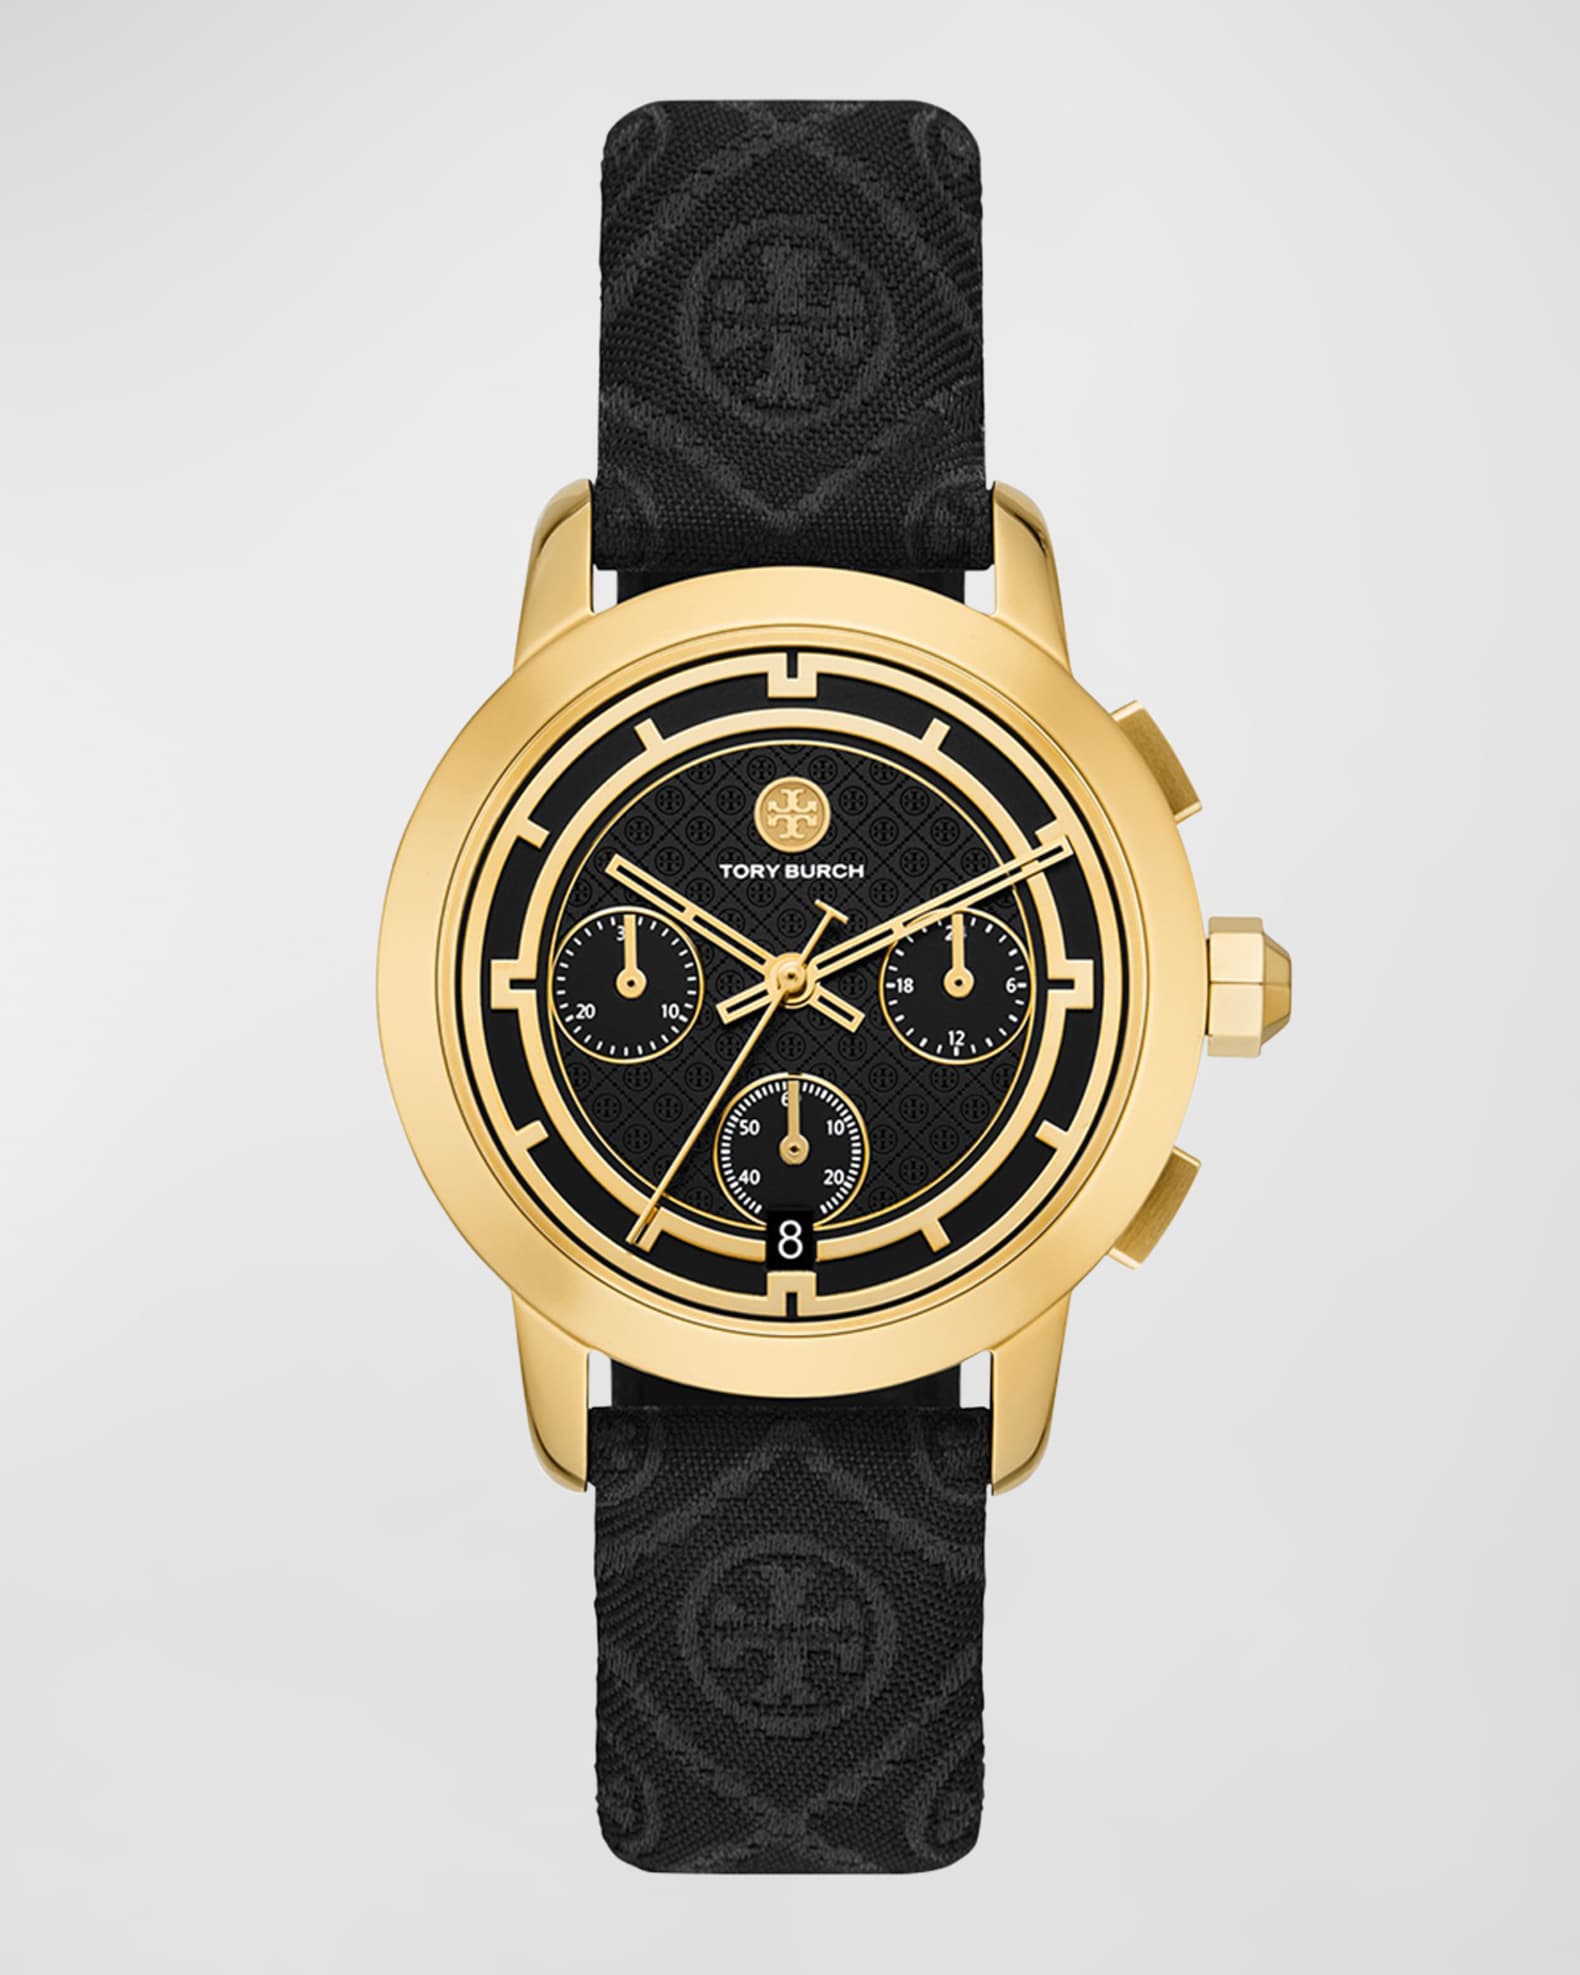 Unisex LV Gold Tone Watch w/Black Face 